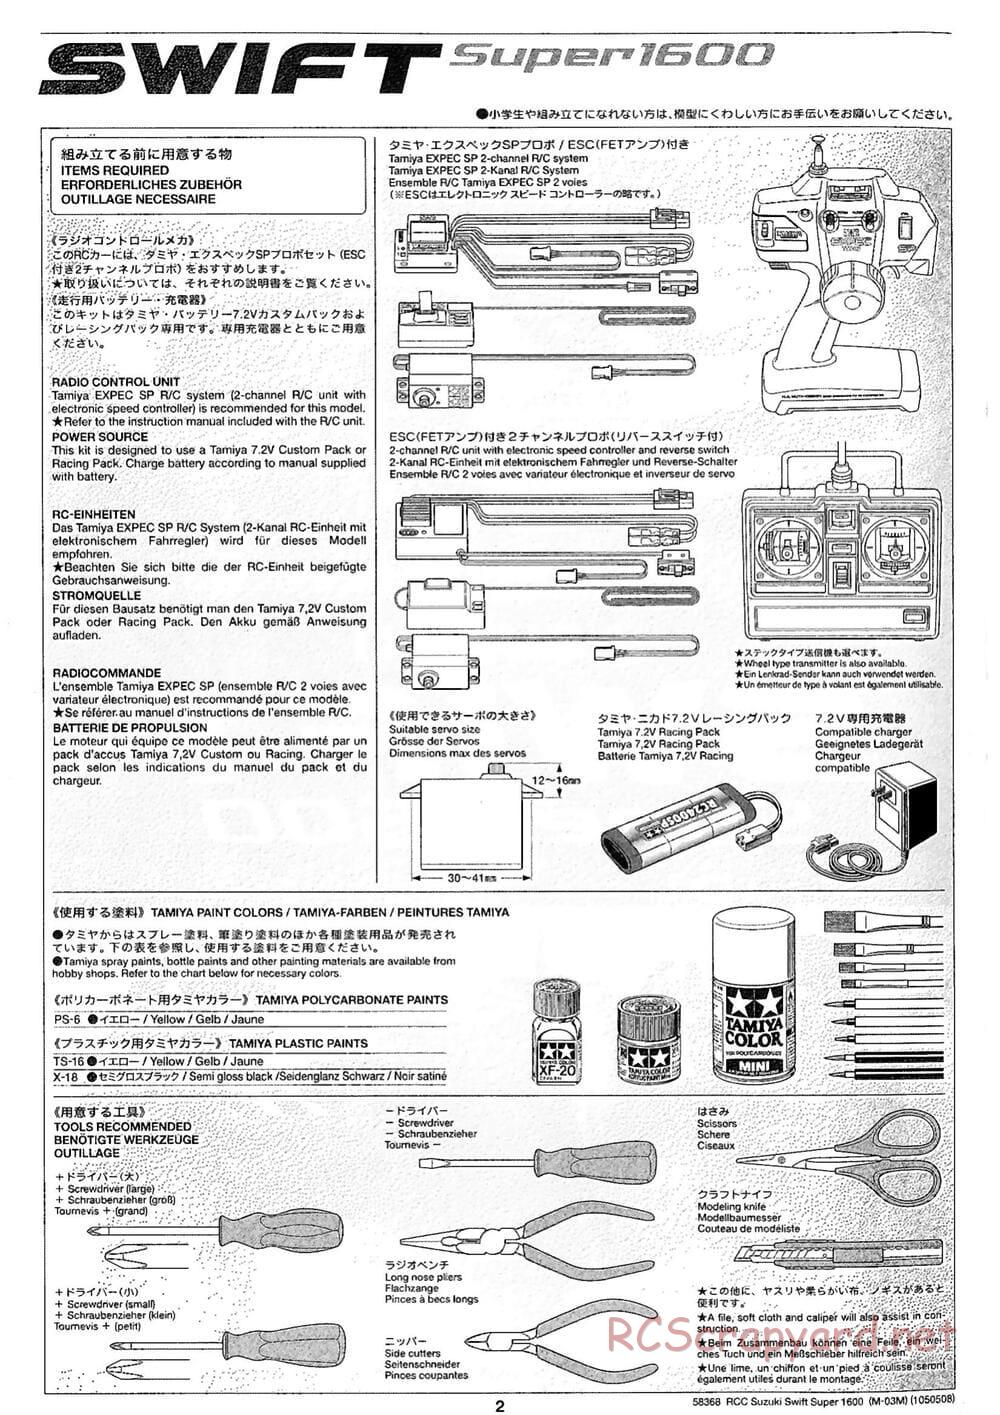 Tamiya - Suzuki Swift Super 1600 - M03M Chassis - Manual - Page 2